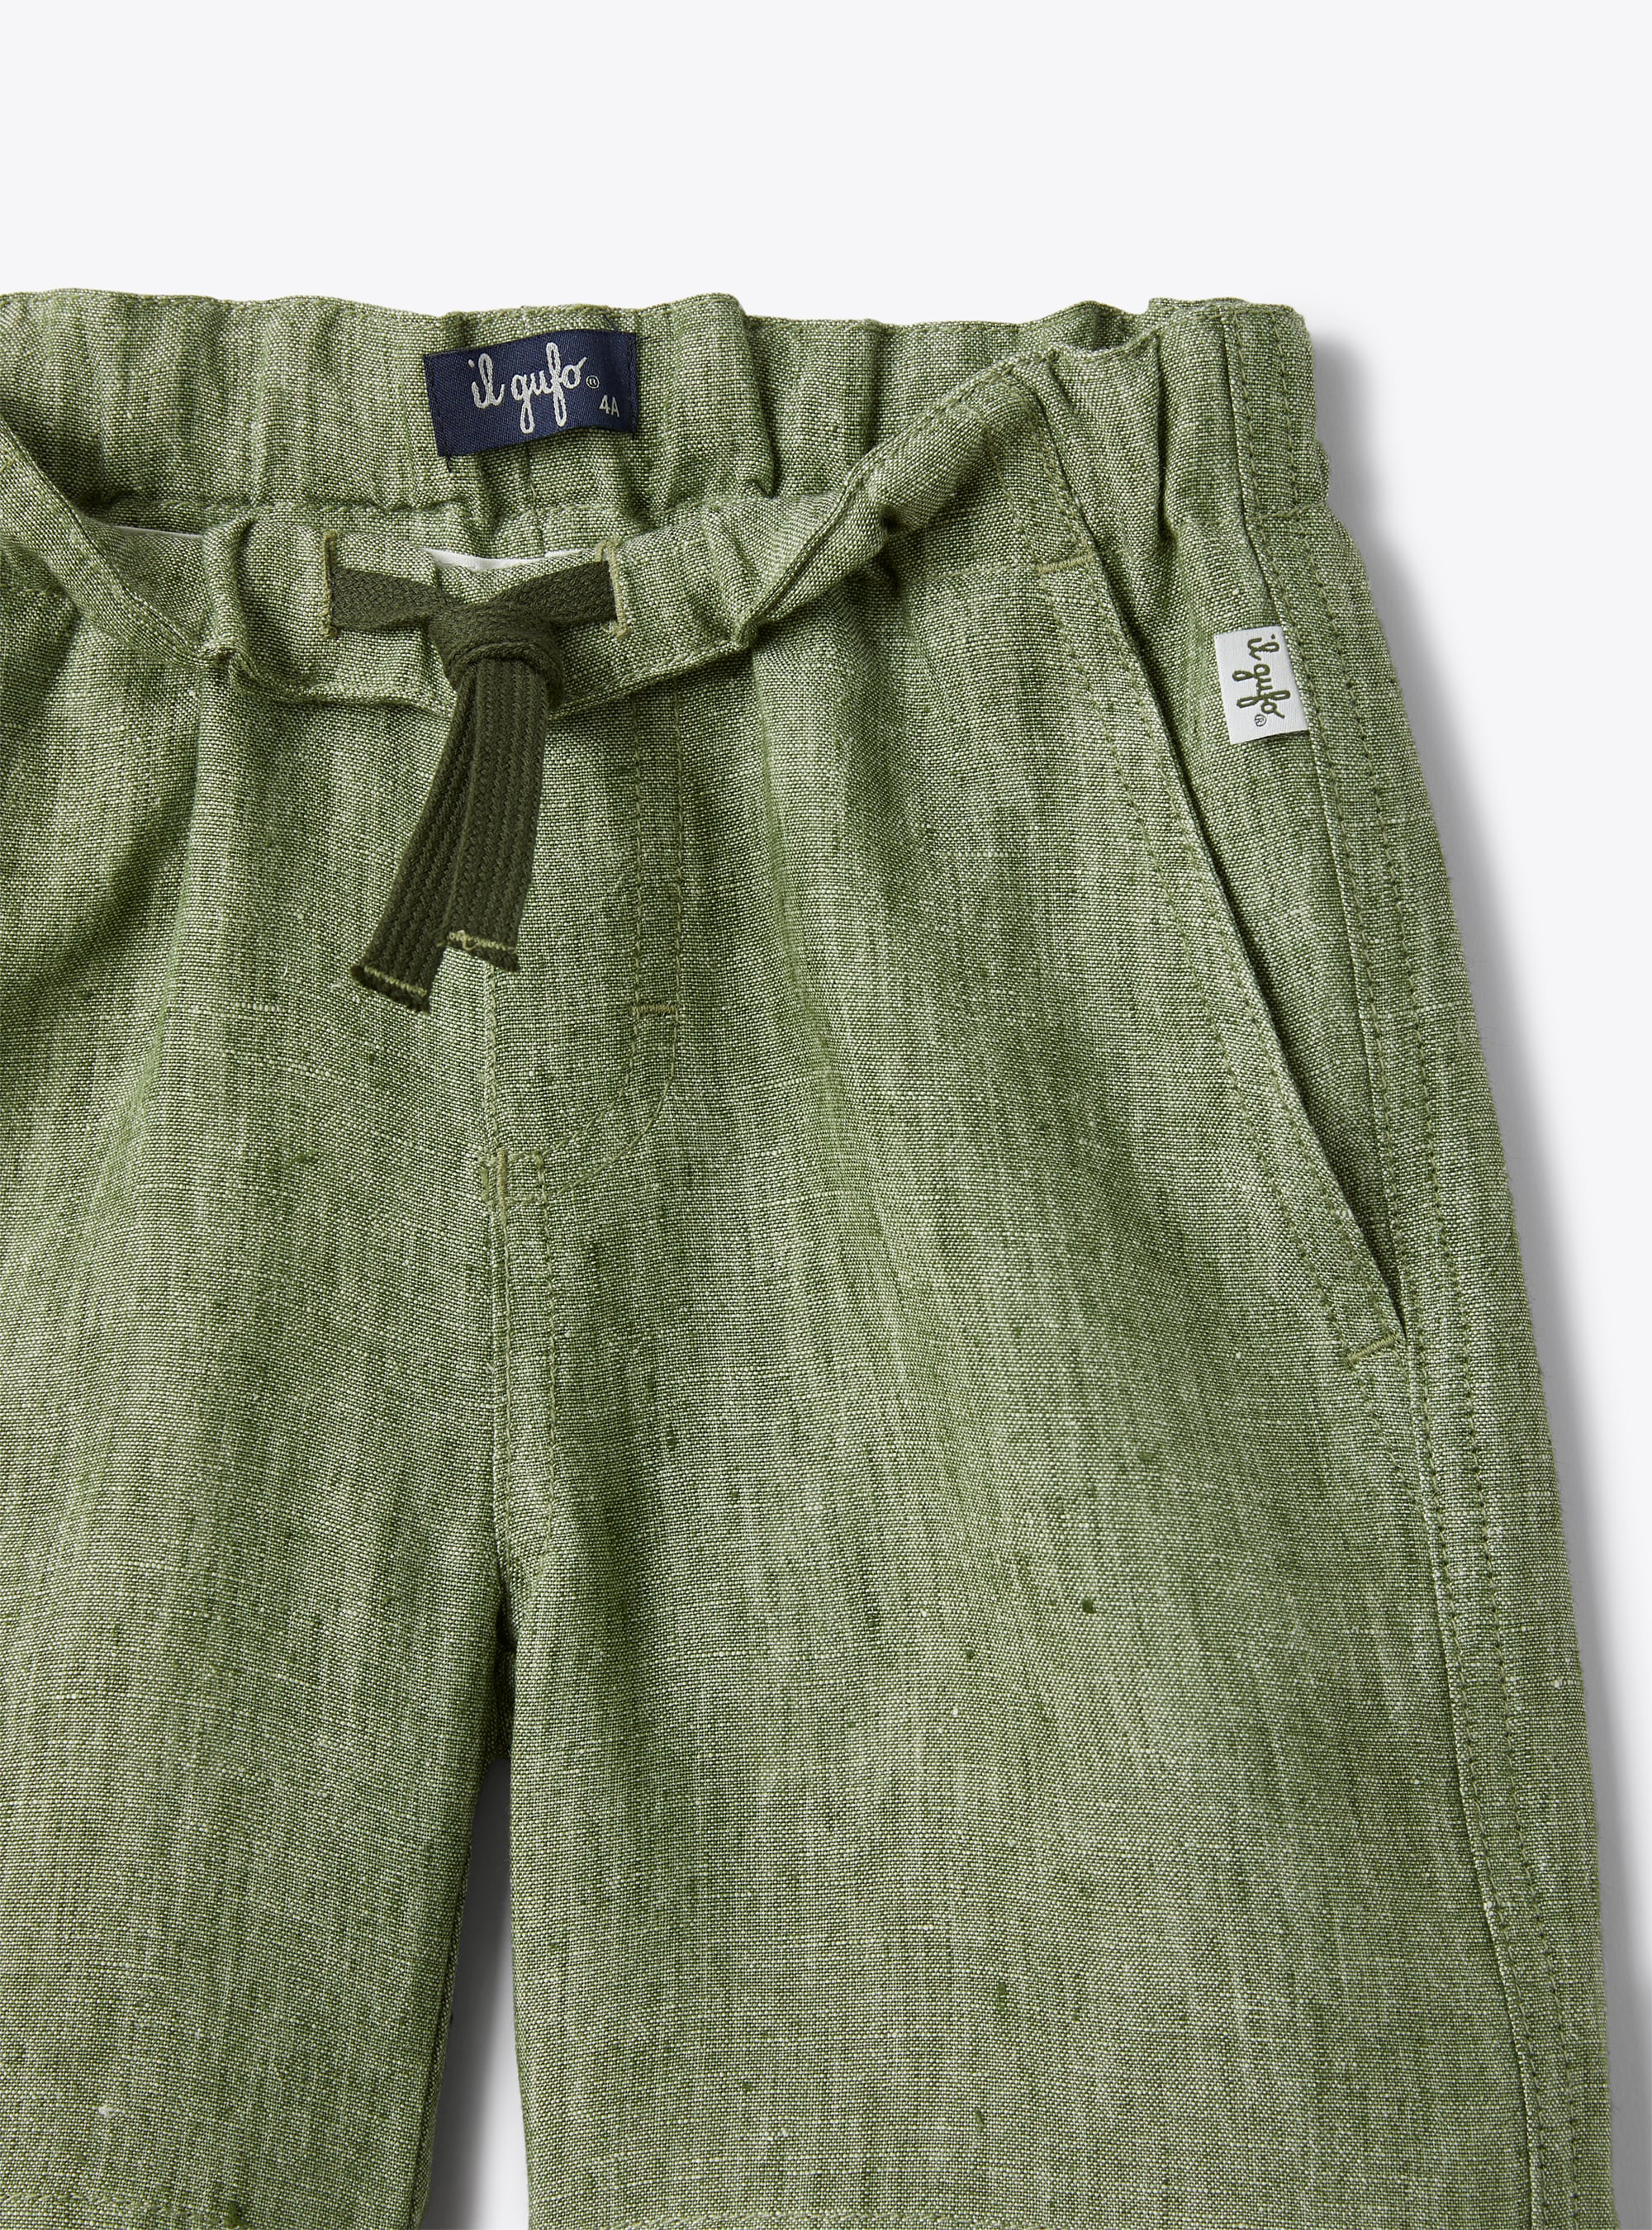 Bermuda shorts in sage-green-mélange linen - Green | Il Gufo